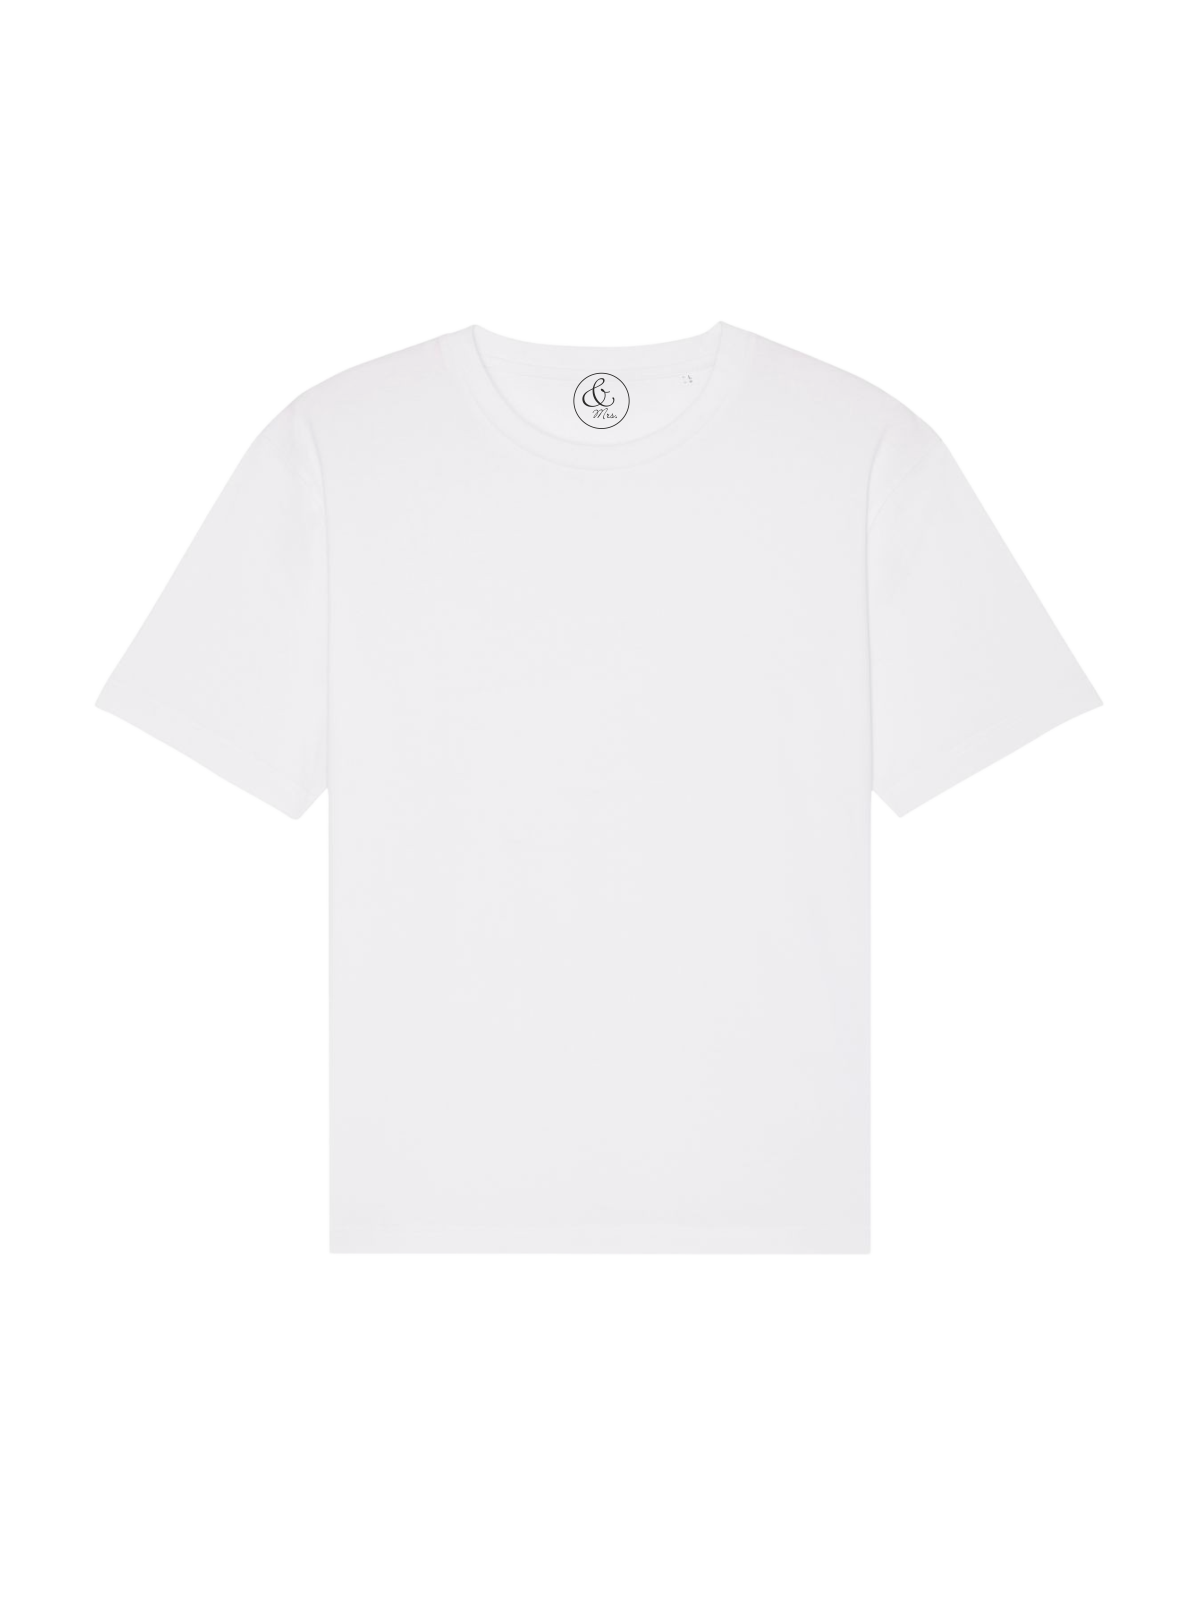 Unisex T- Shirt Amore Mio